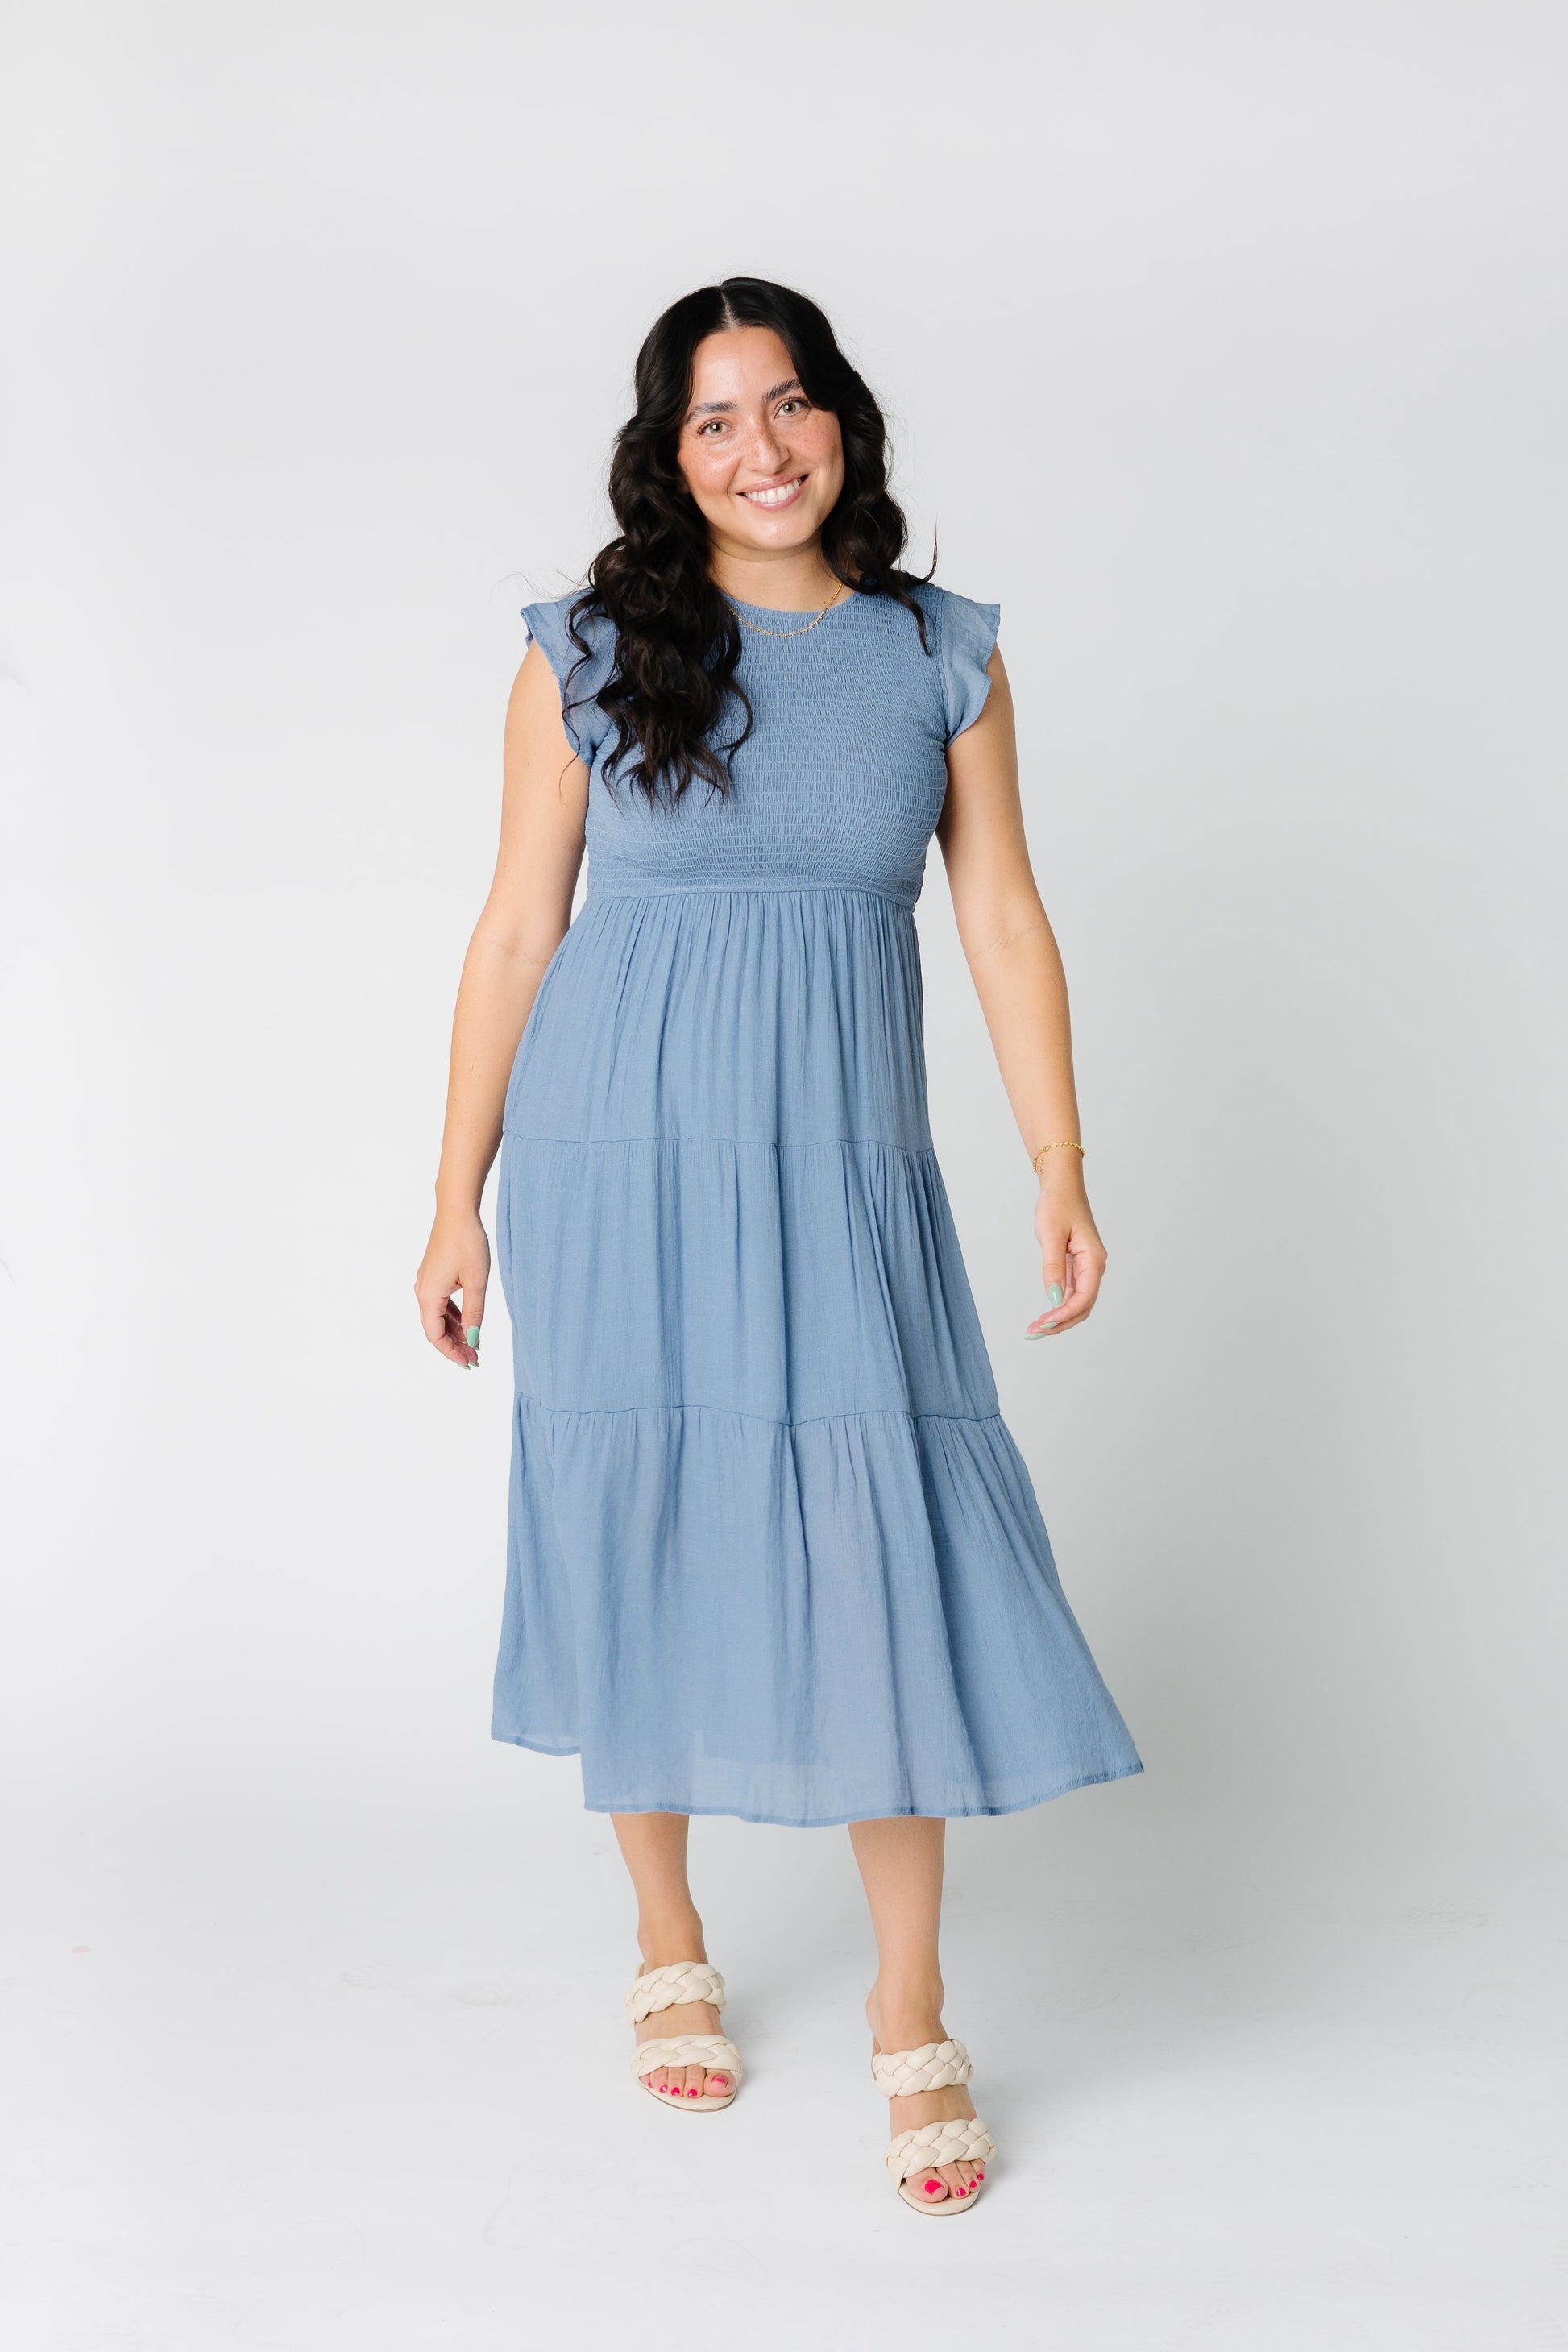 All In Smocked Dress - Blush & Chambray WOMEN'S DRESS Blu Pepper Chambray Dusty Blue S 